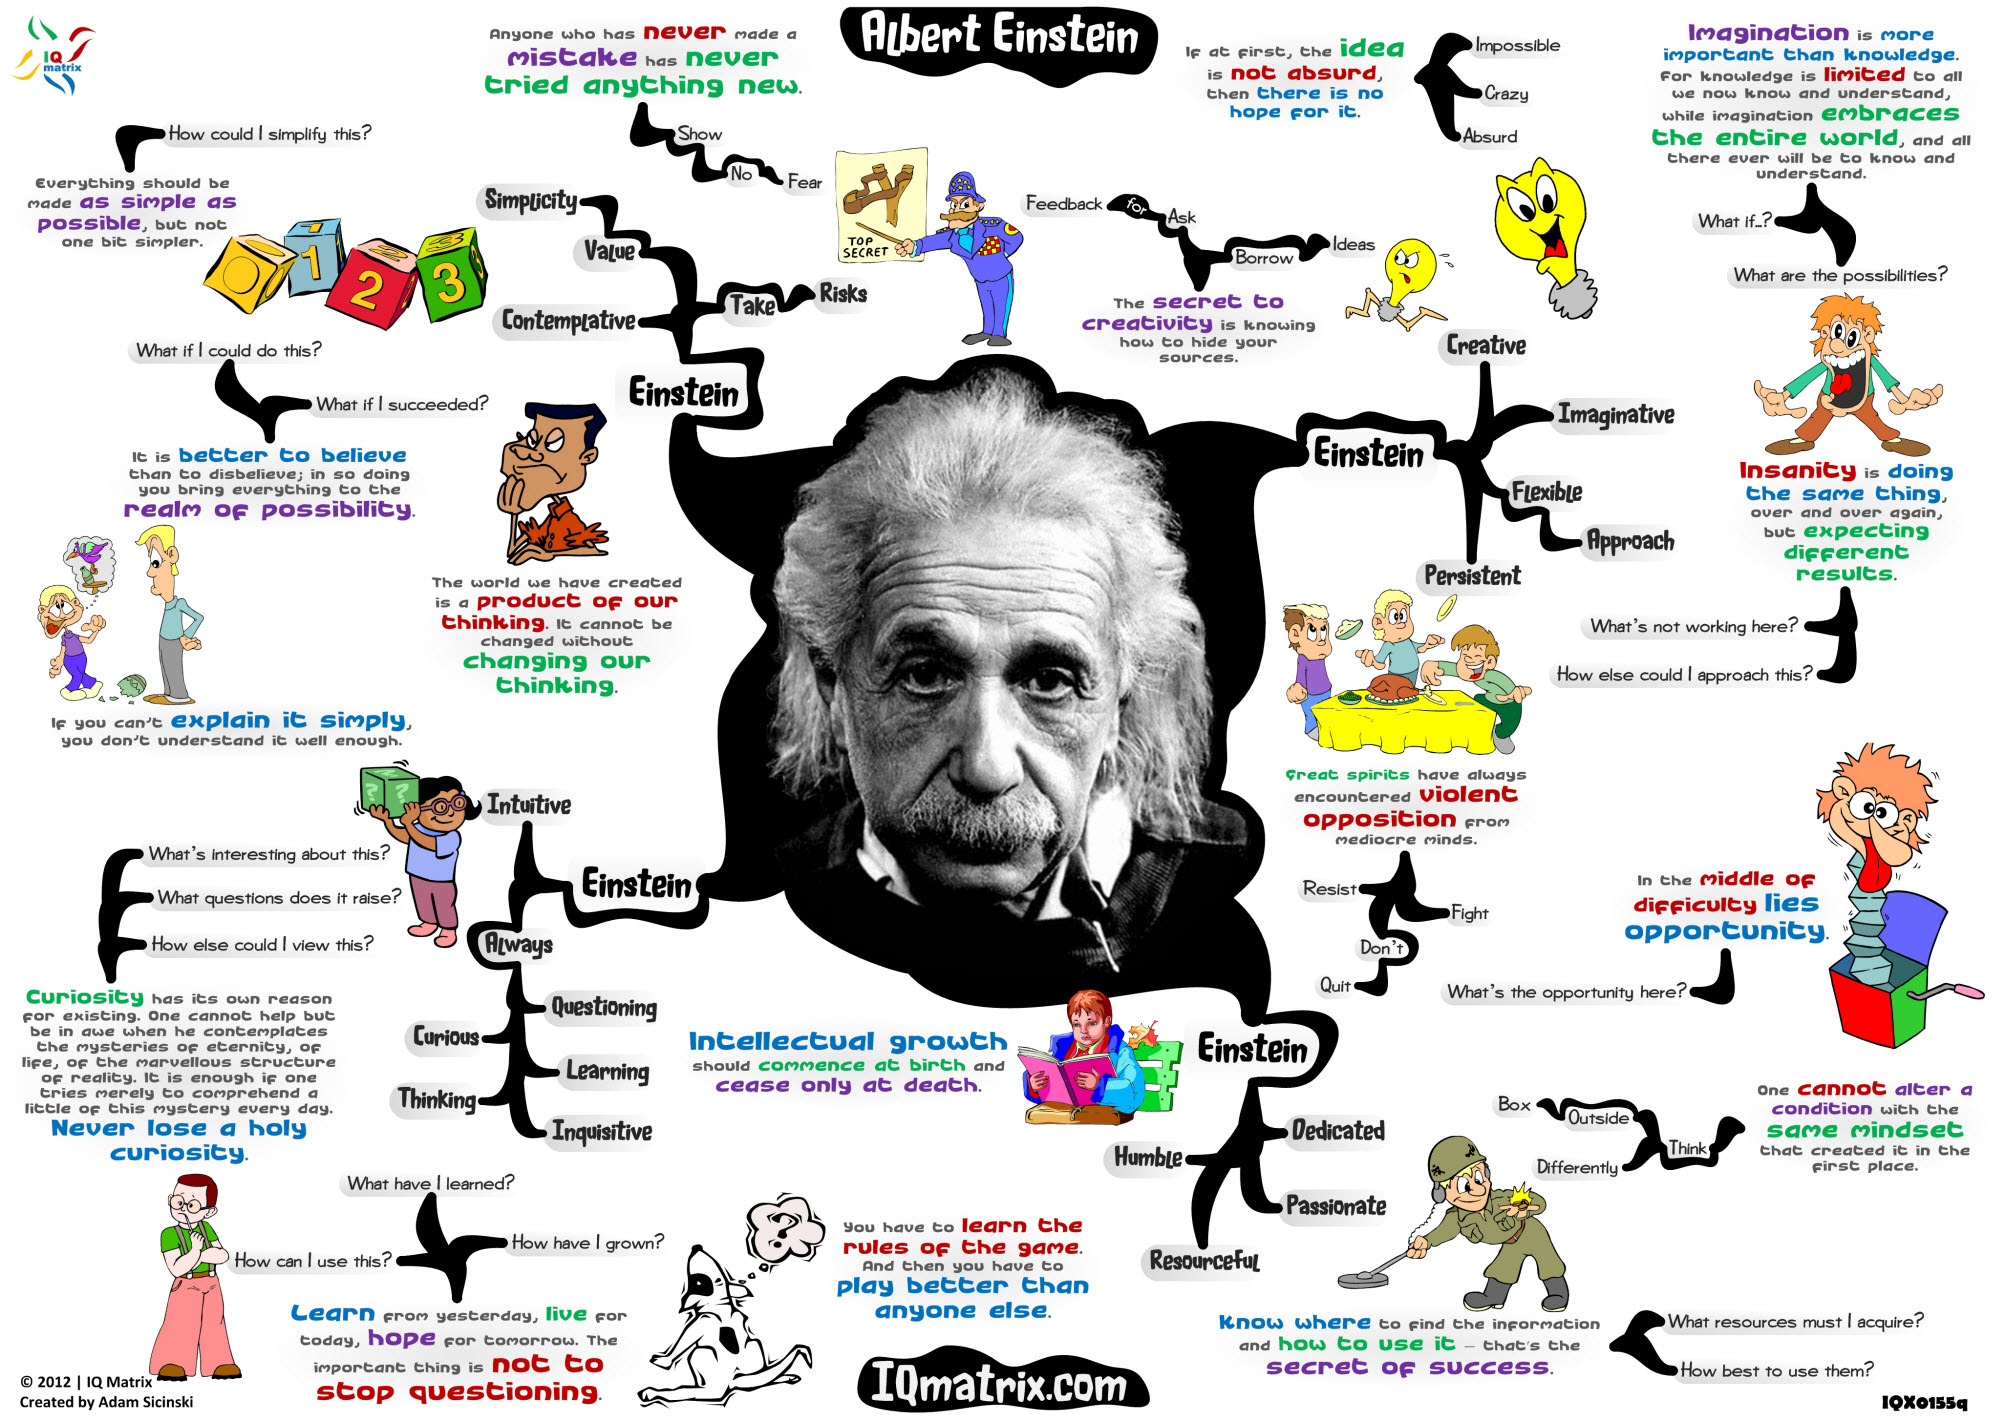 handling technical assignments in college - Albert Einstein example